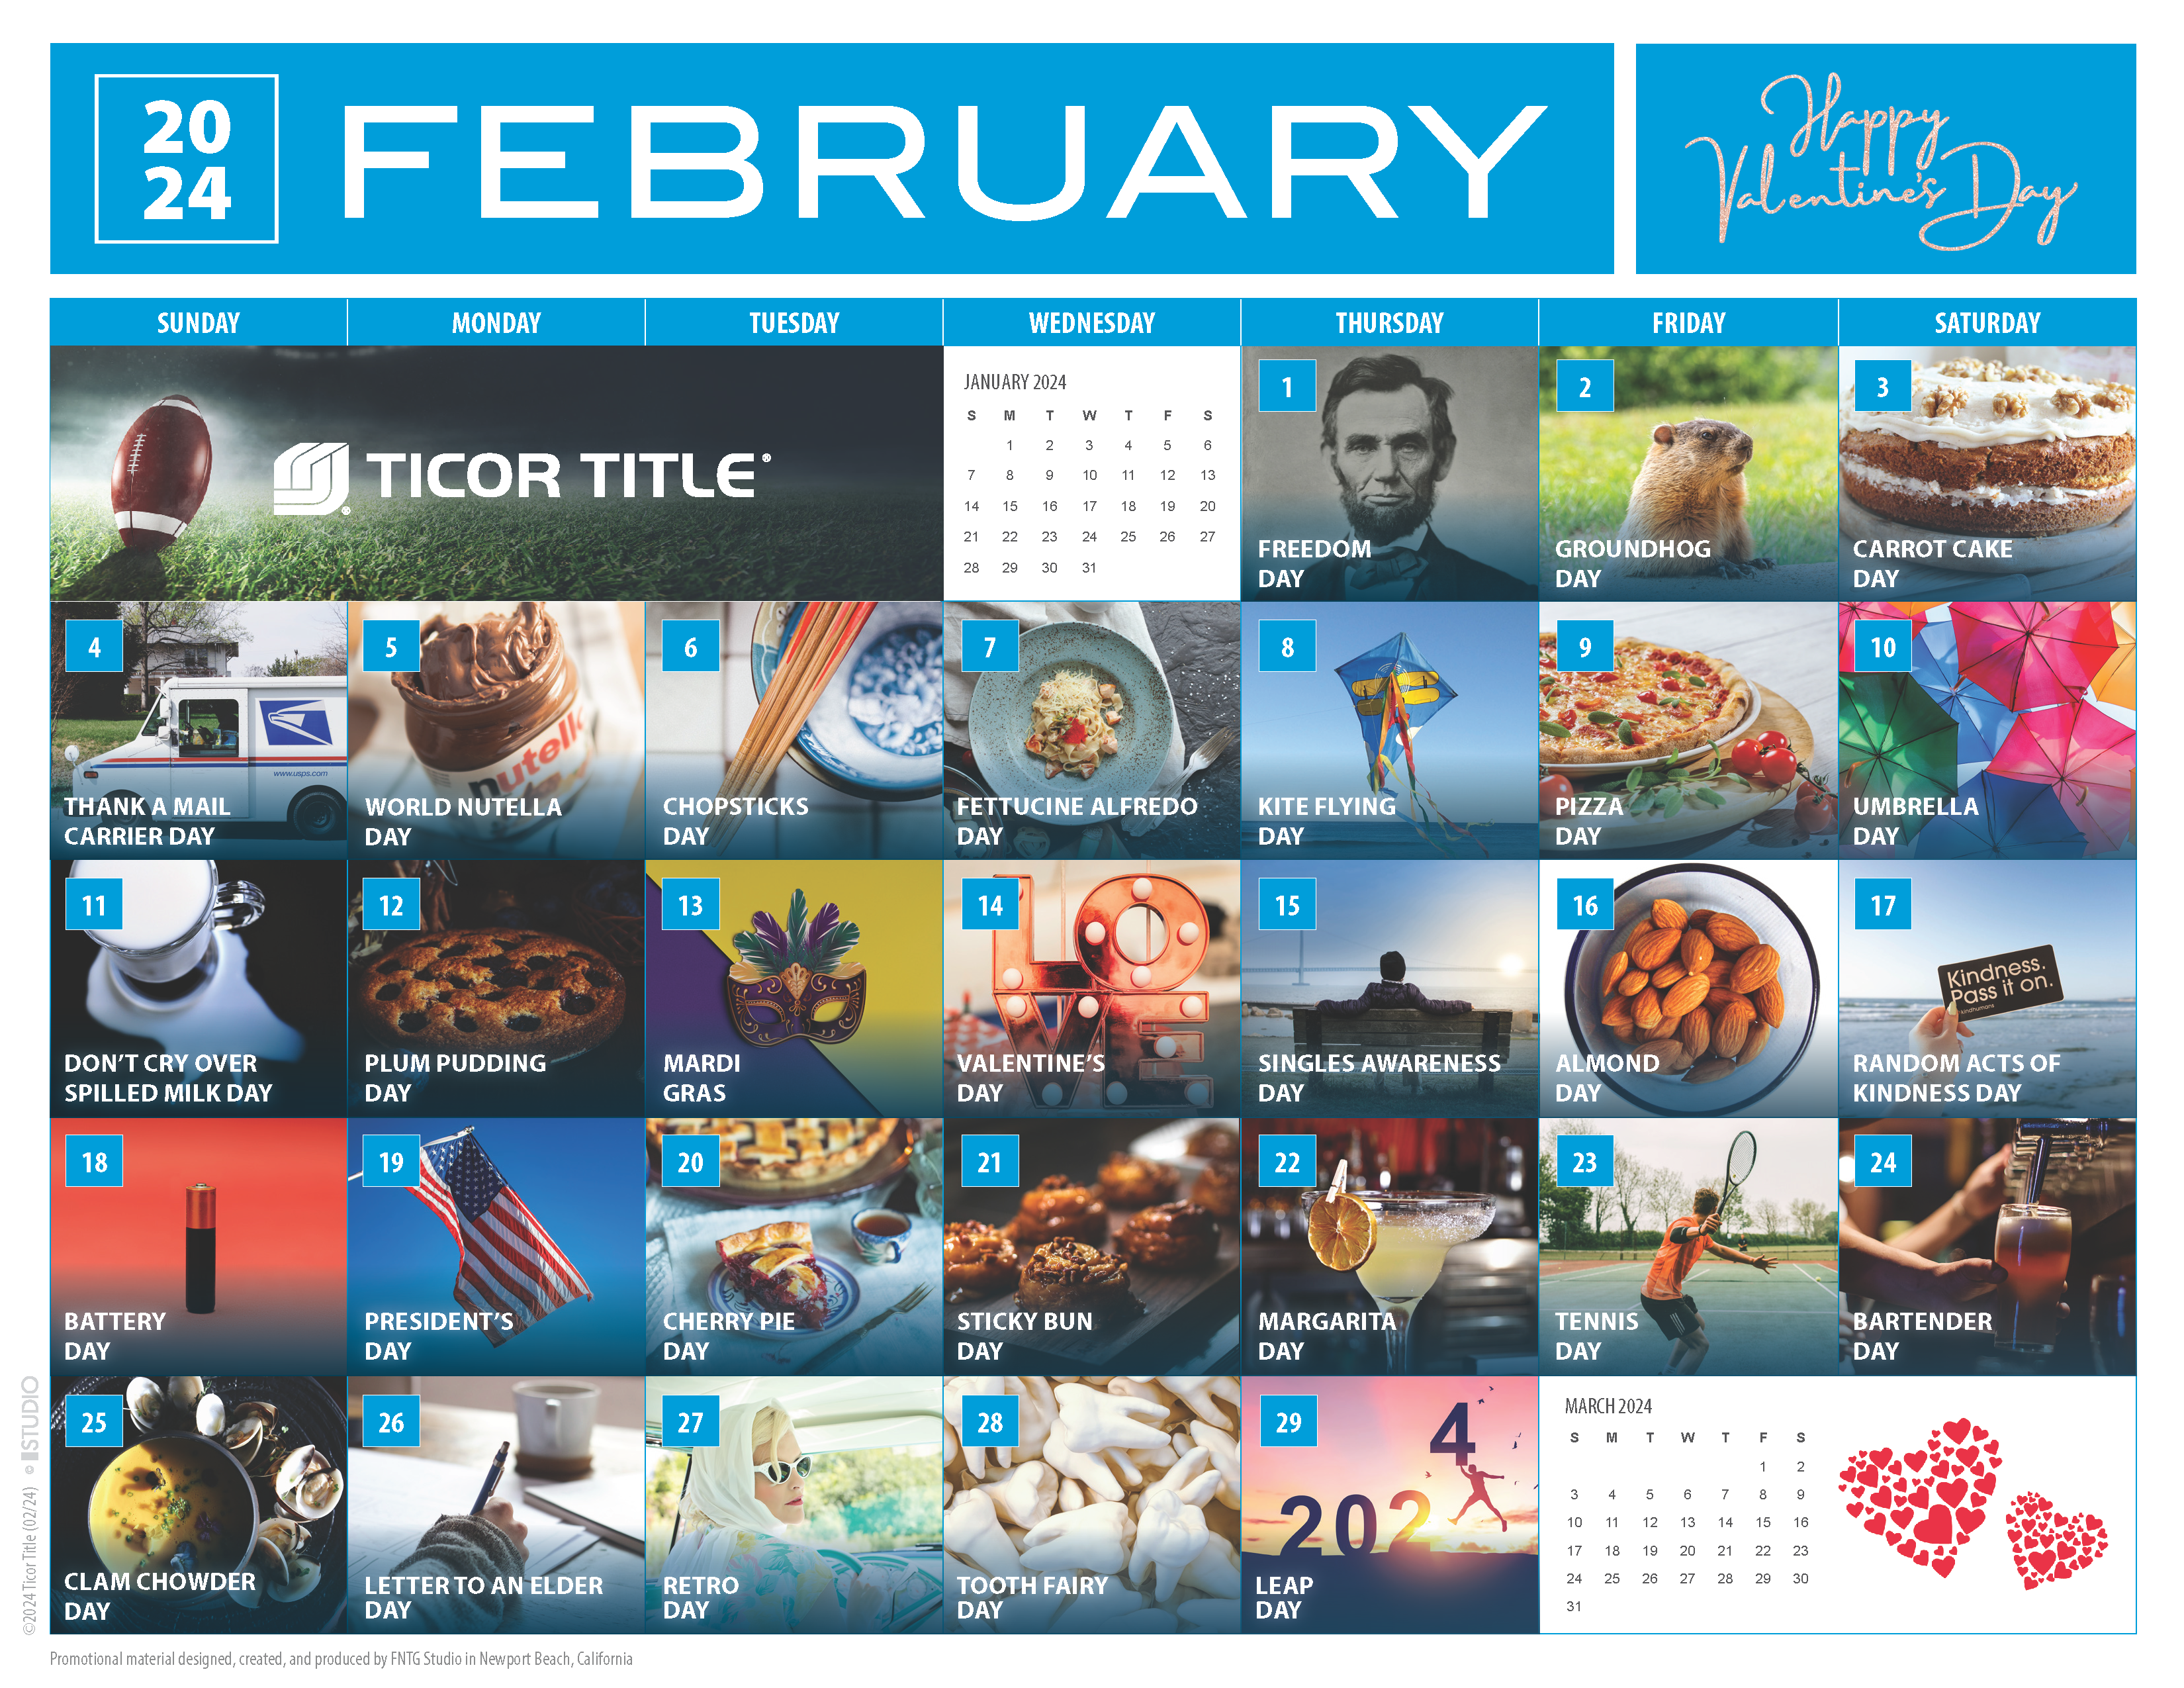 Monthly Fun Calendarimg